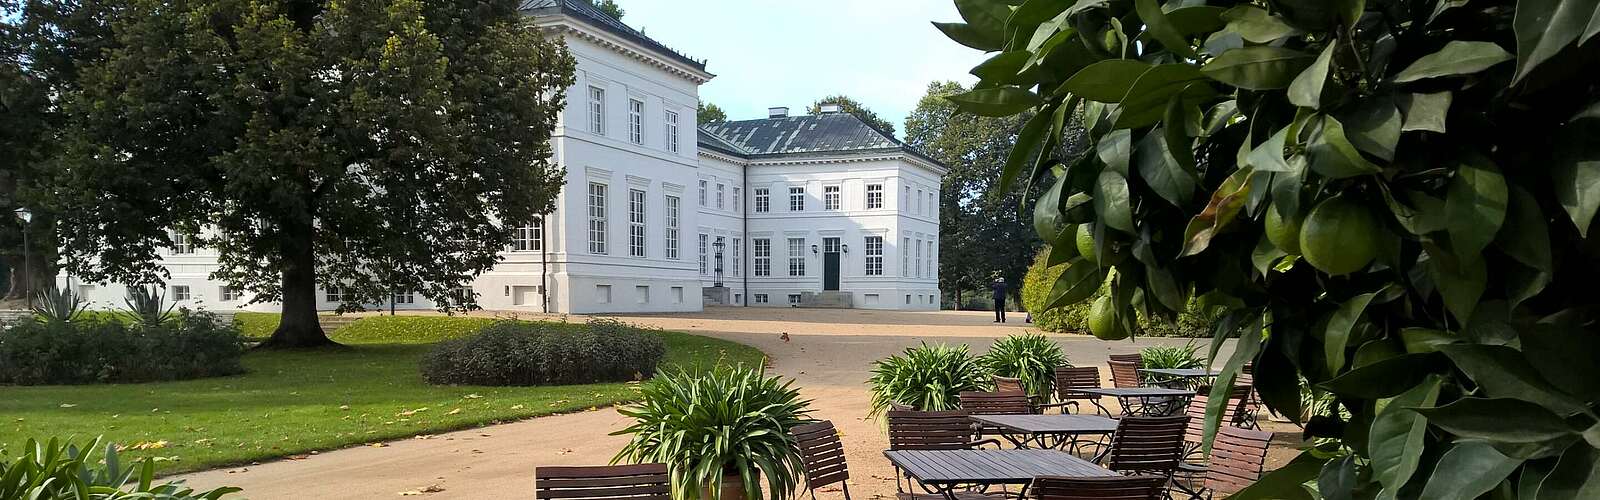 Schloss Neuhardenberg,
        
    

        Foto: TMB-Fotoarchiv/Heidi Walter